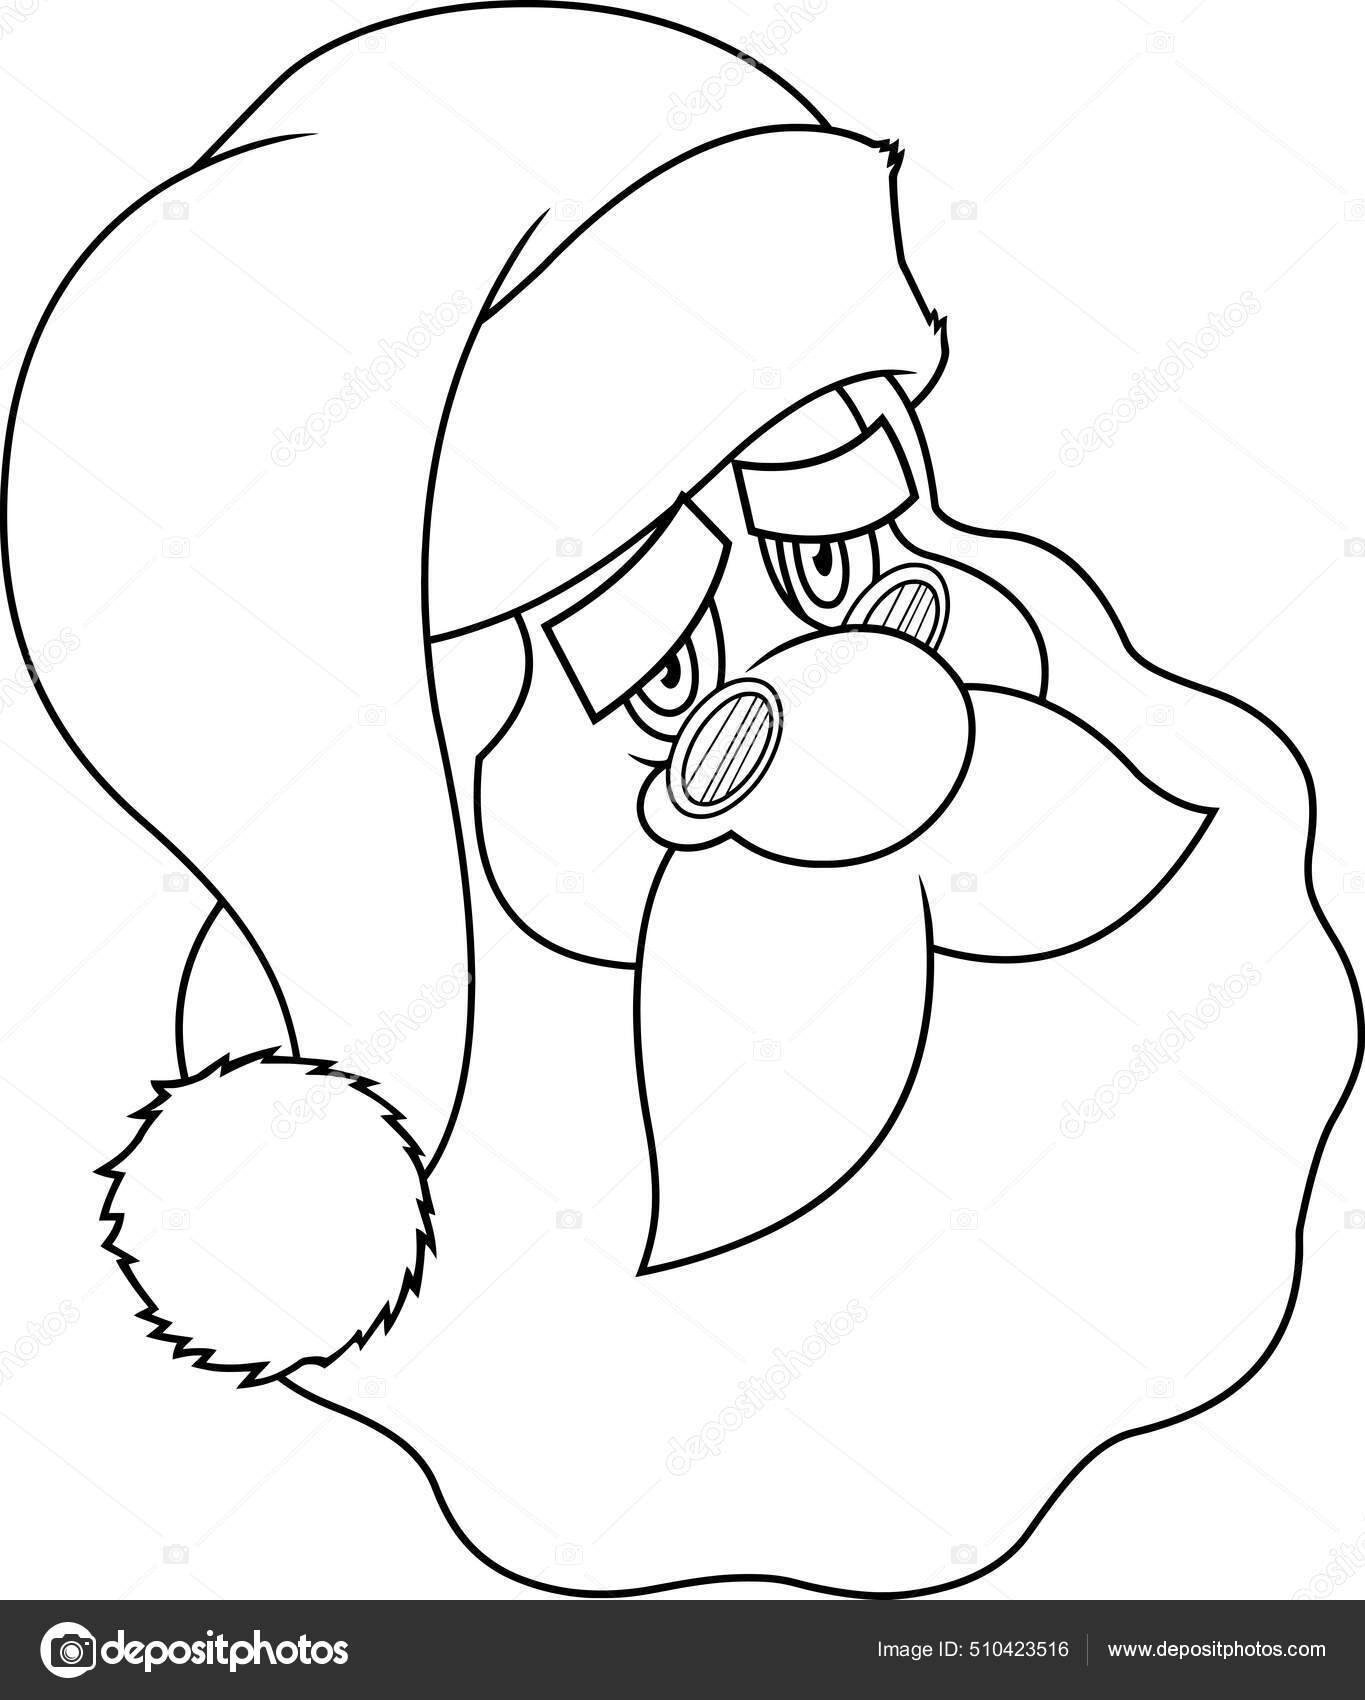 Hand drawn cartoon of santa claus face clip art Vector Image